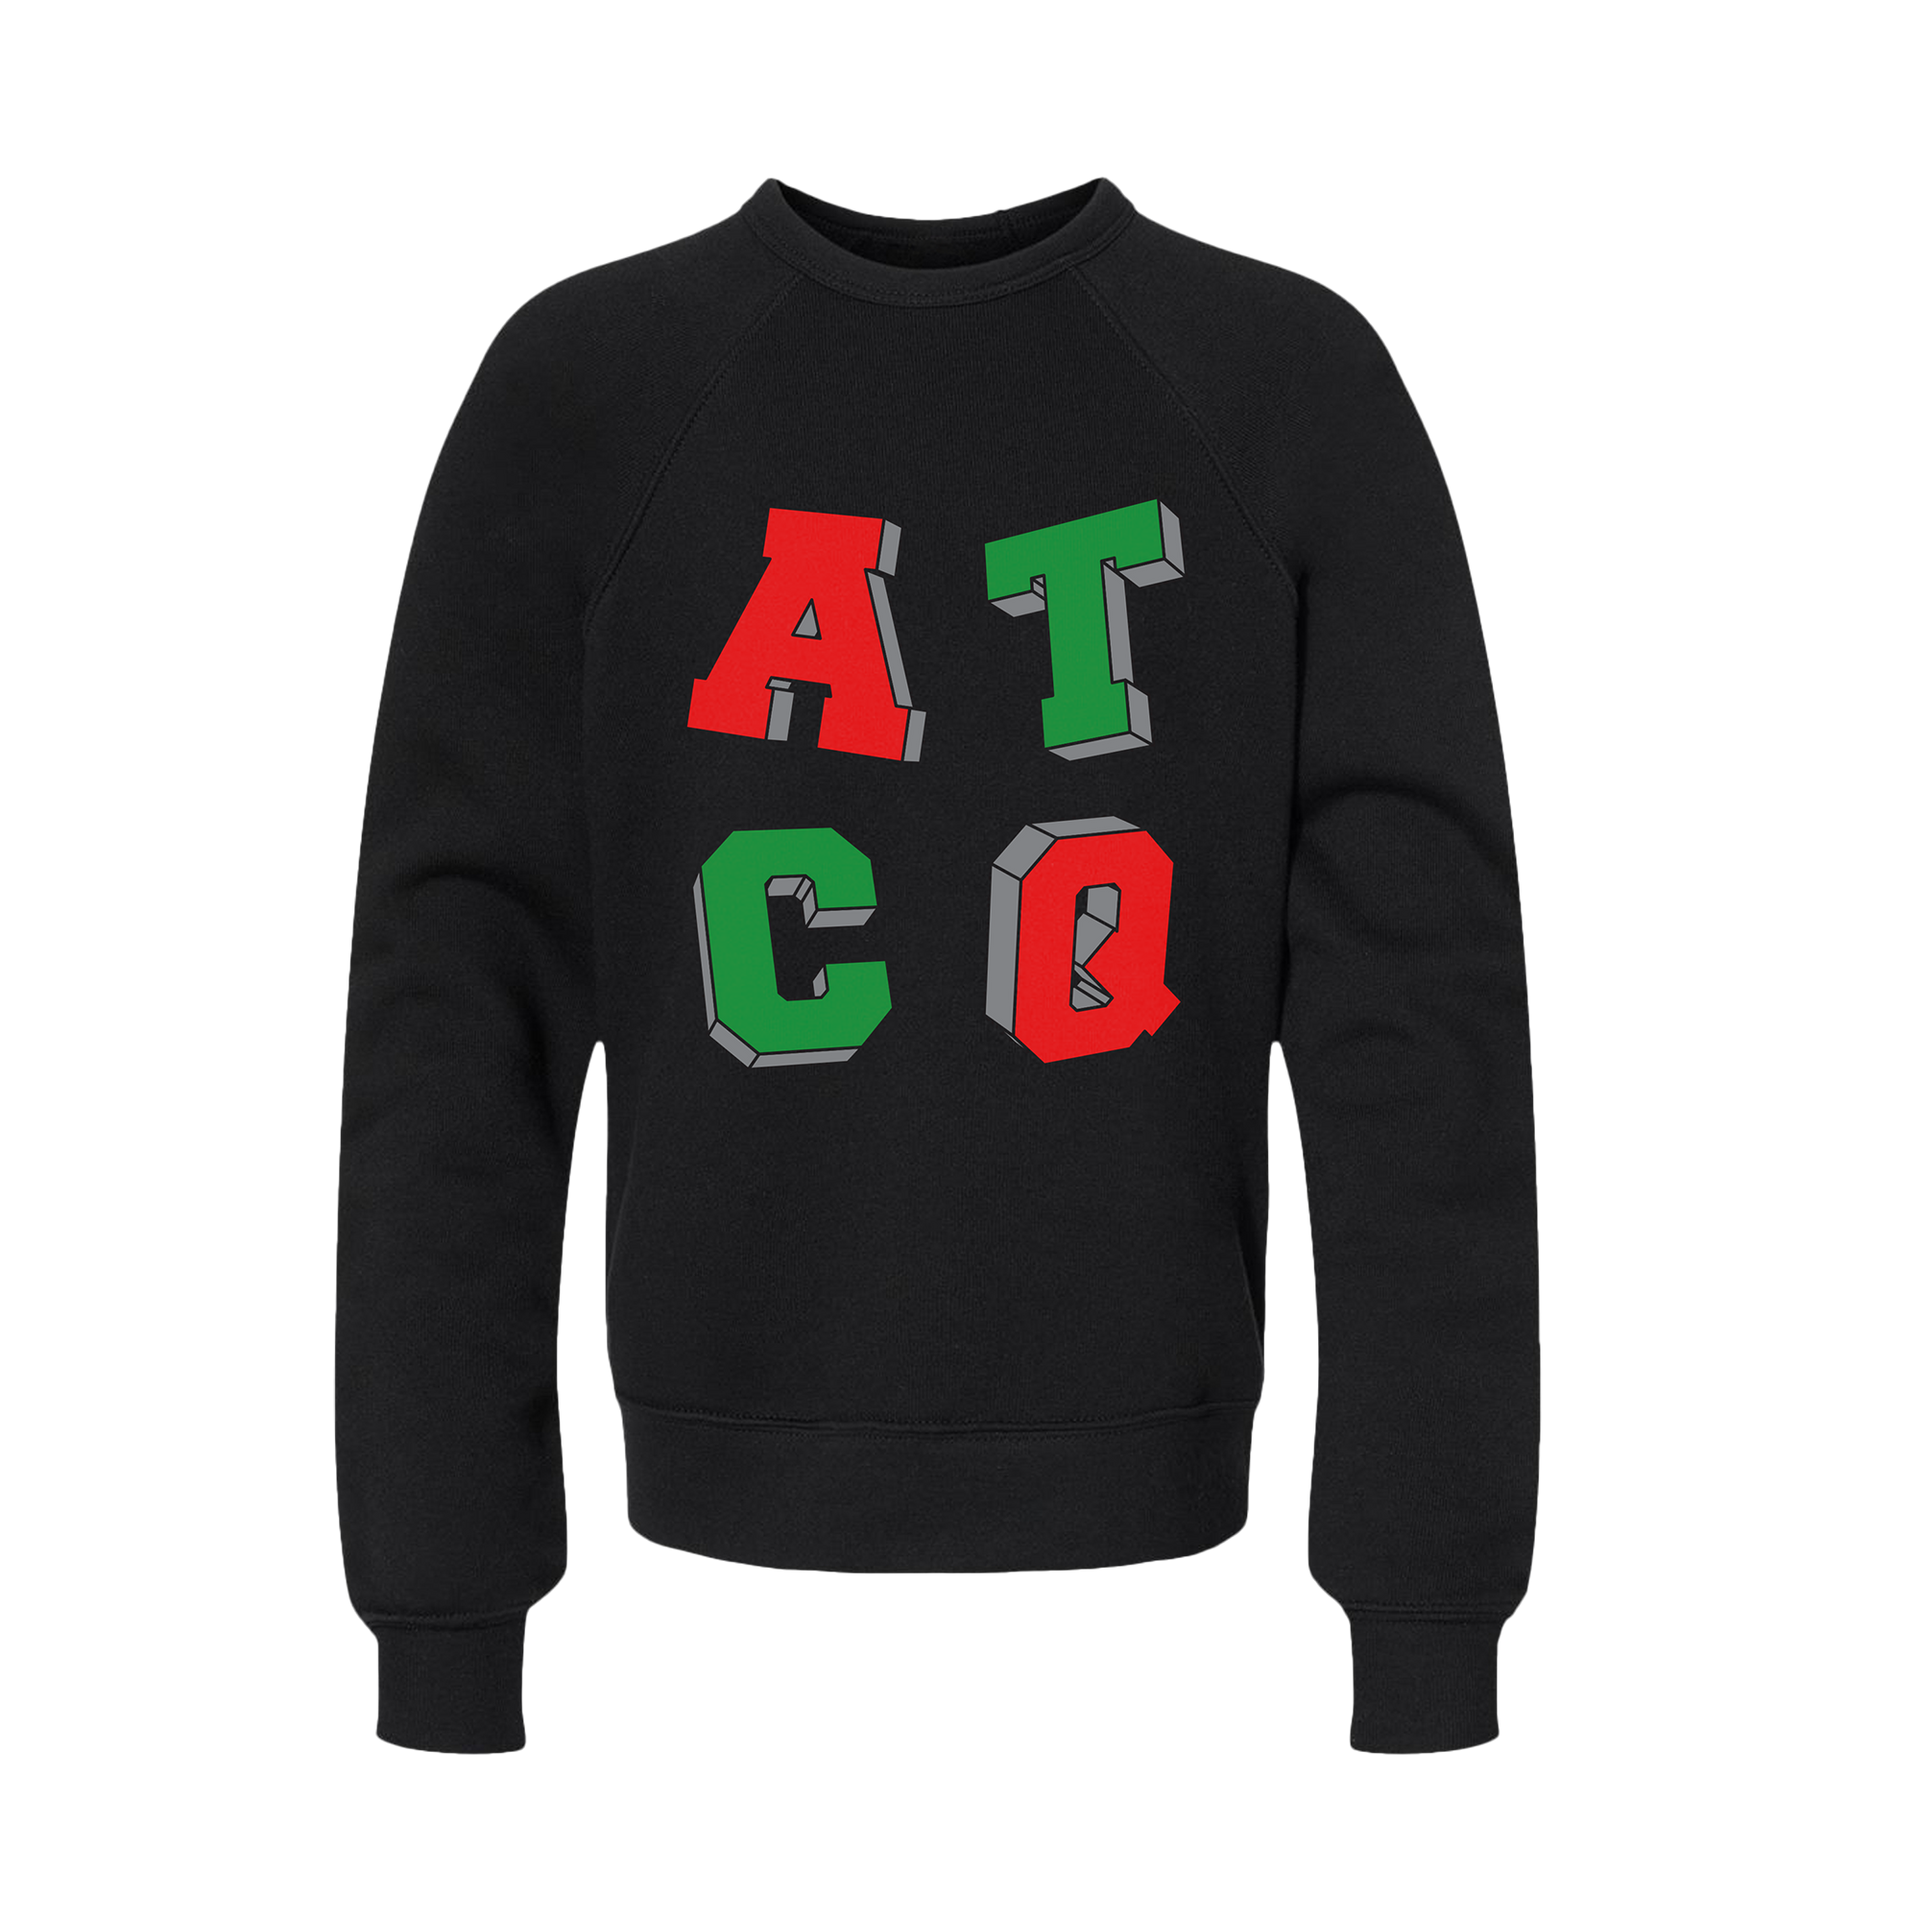 ATCQ Youth Acronym Black Crewneck